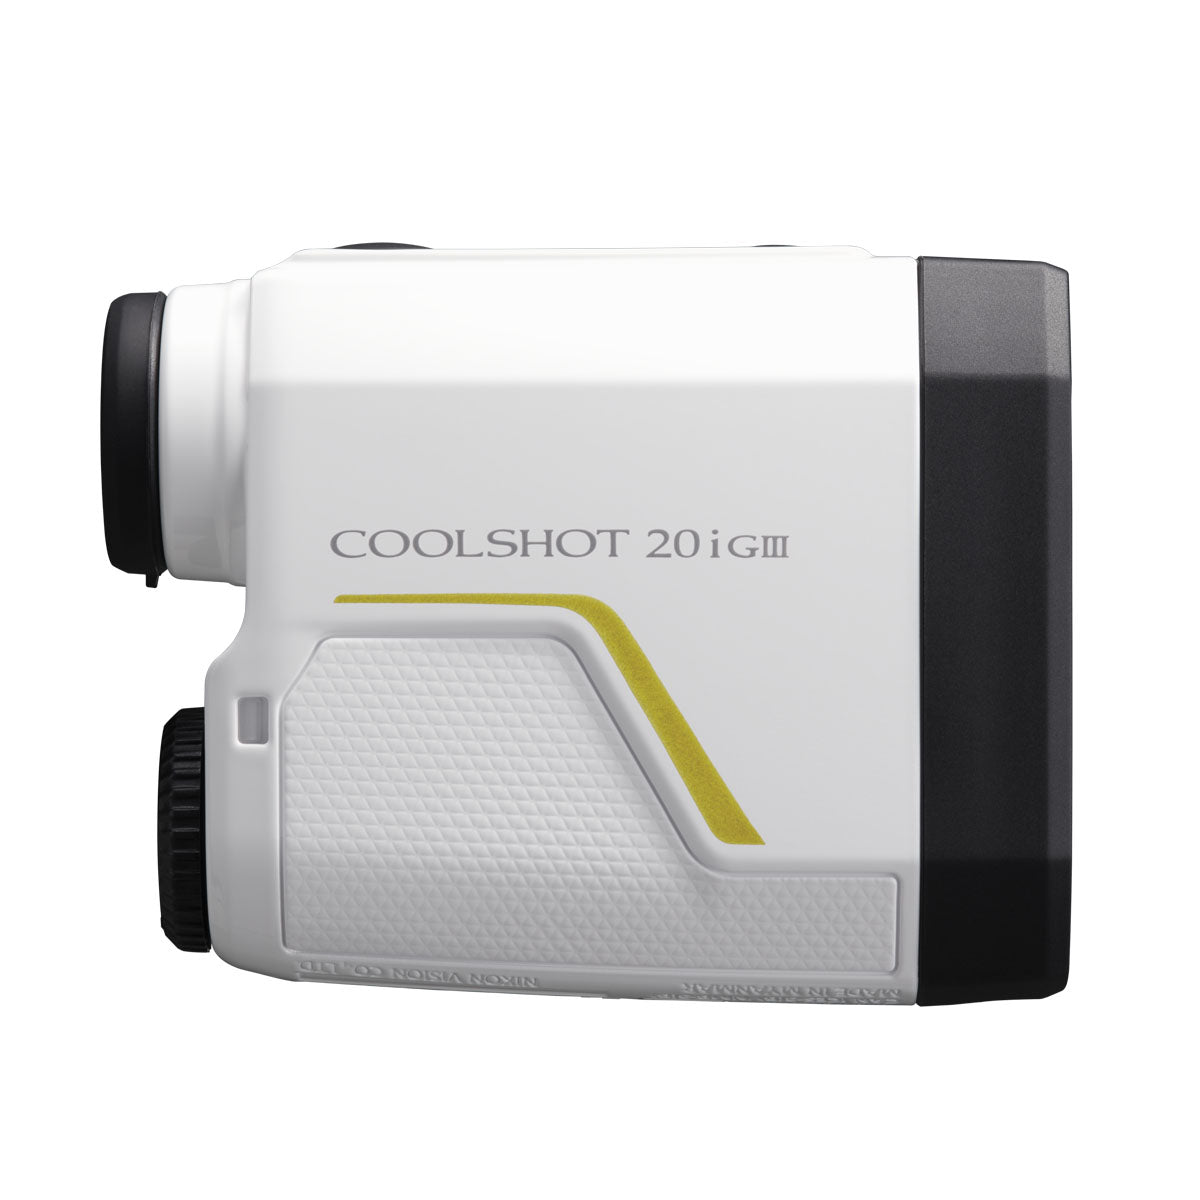 Nikon Coolshot 20I GIII Golf Laser Rangefinder 5-730m